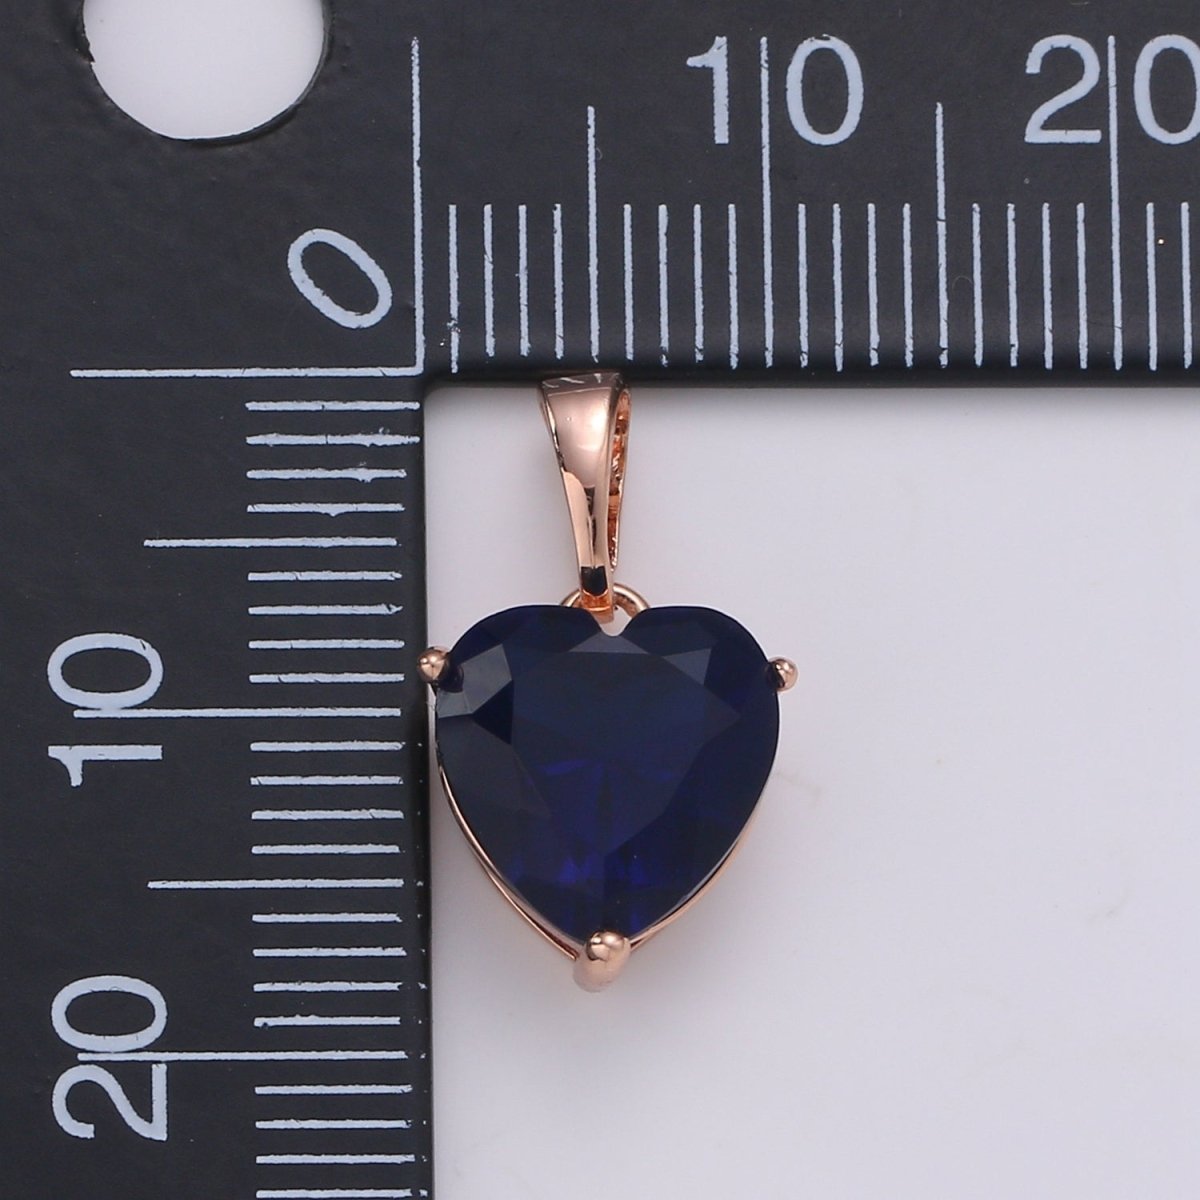 18k Gold Fill Charm Green Color Heart Cubic Zirconia Charm w/ Colored CZ Crystal Gem Stone GemStone Pendant Valentine Jewelry Supply J-202 - DLUXCA